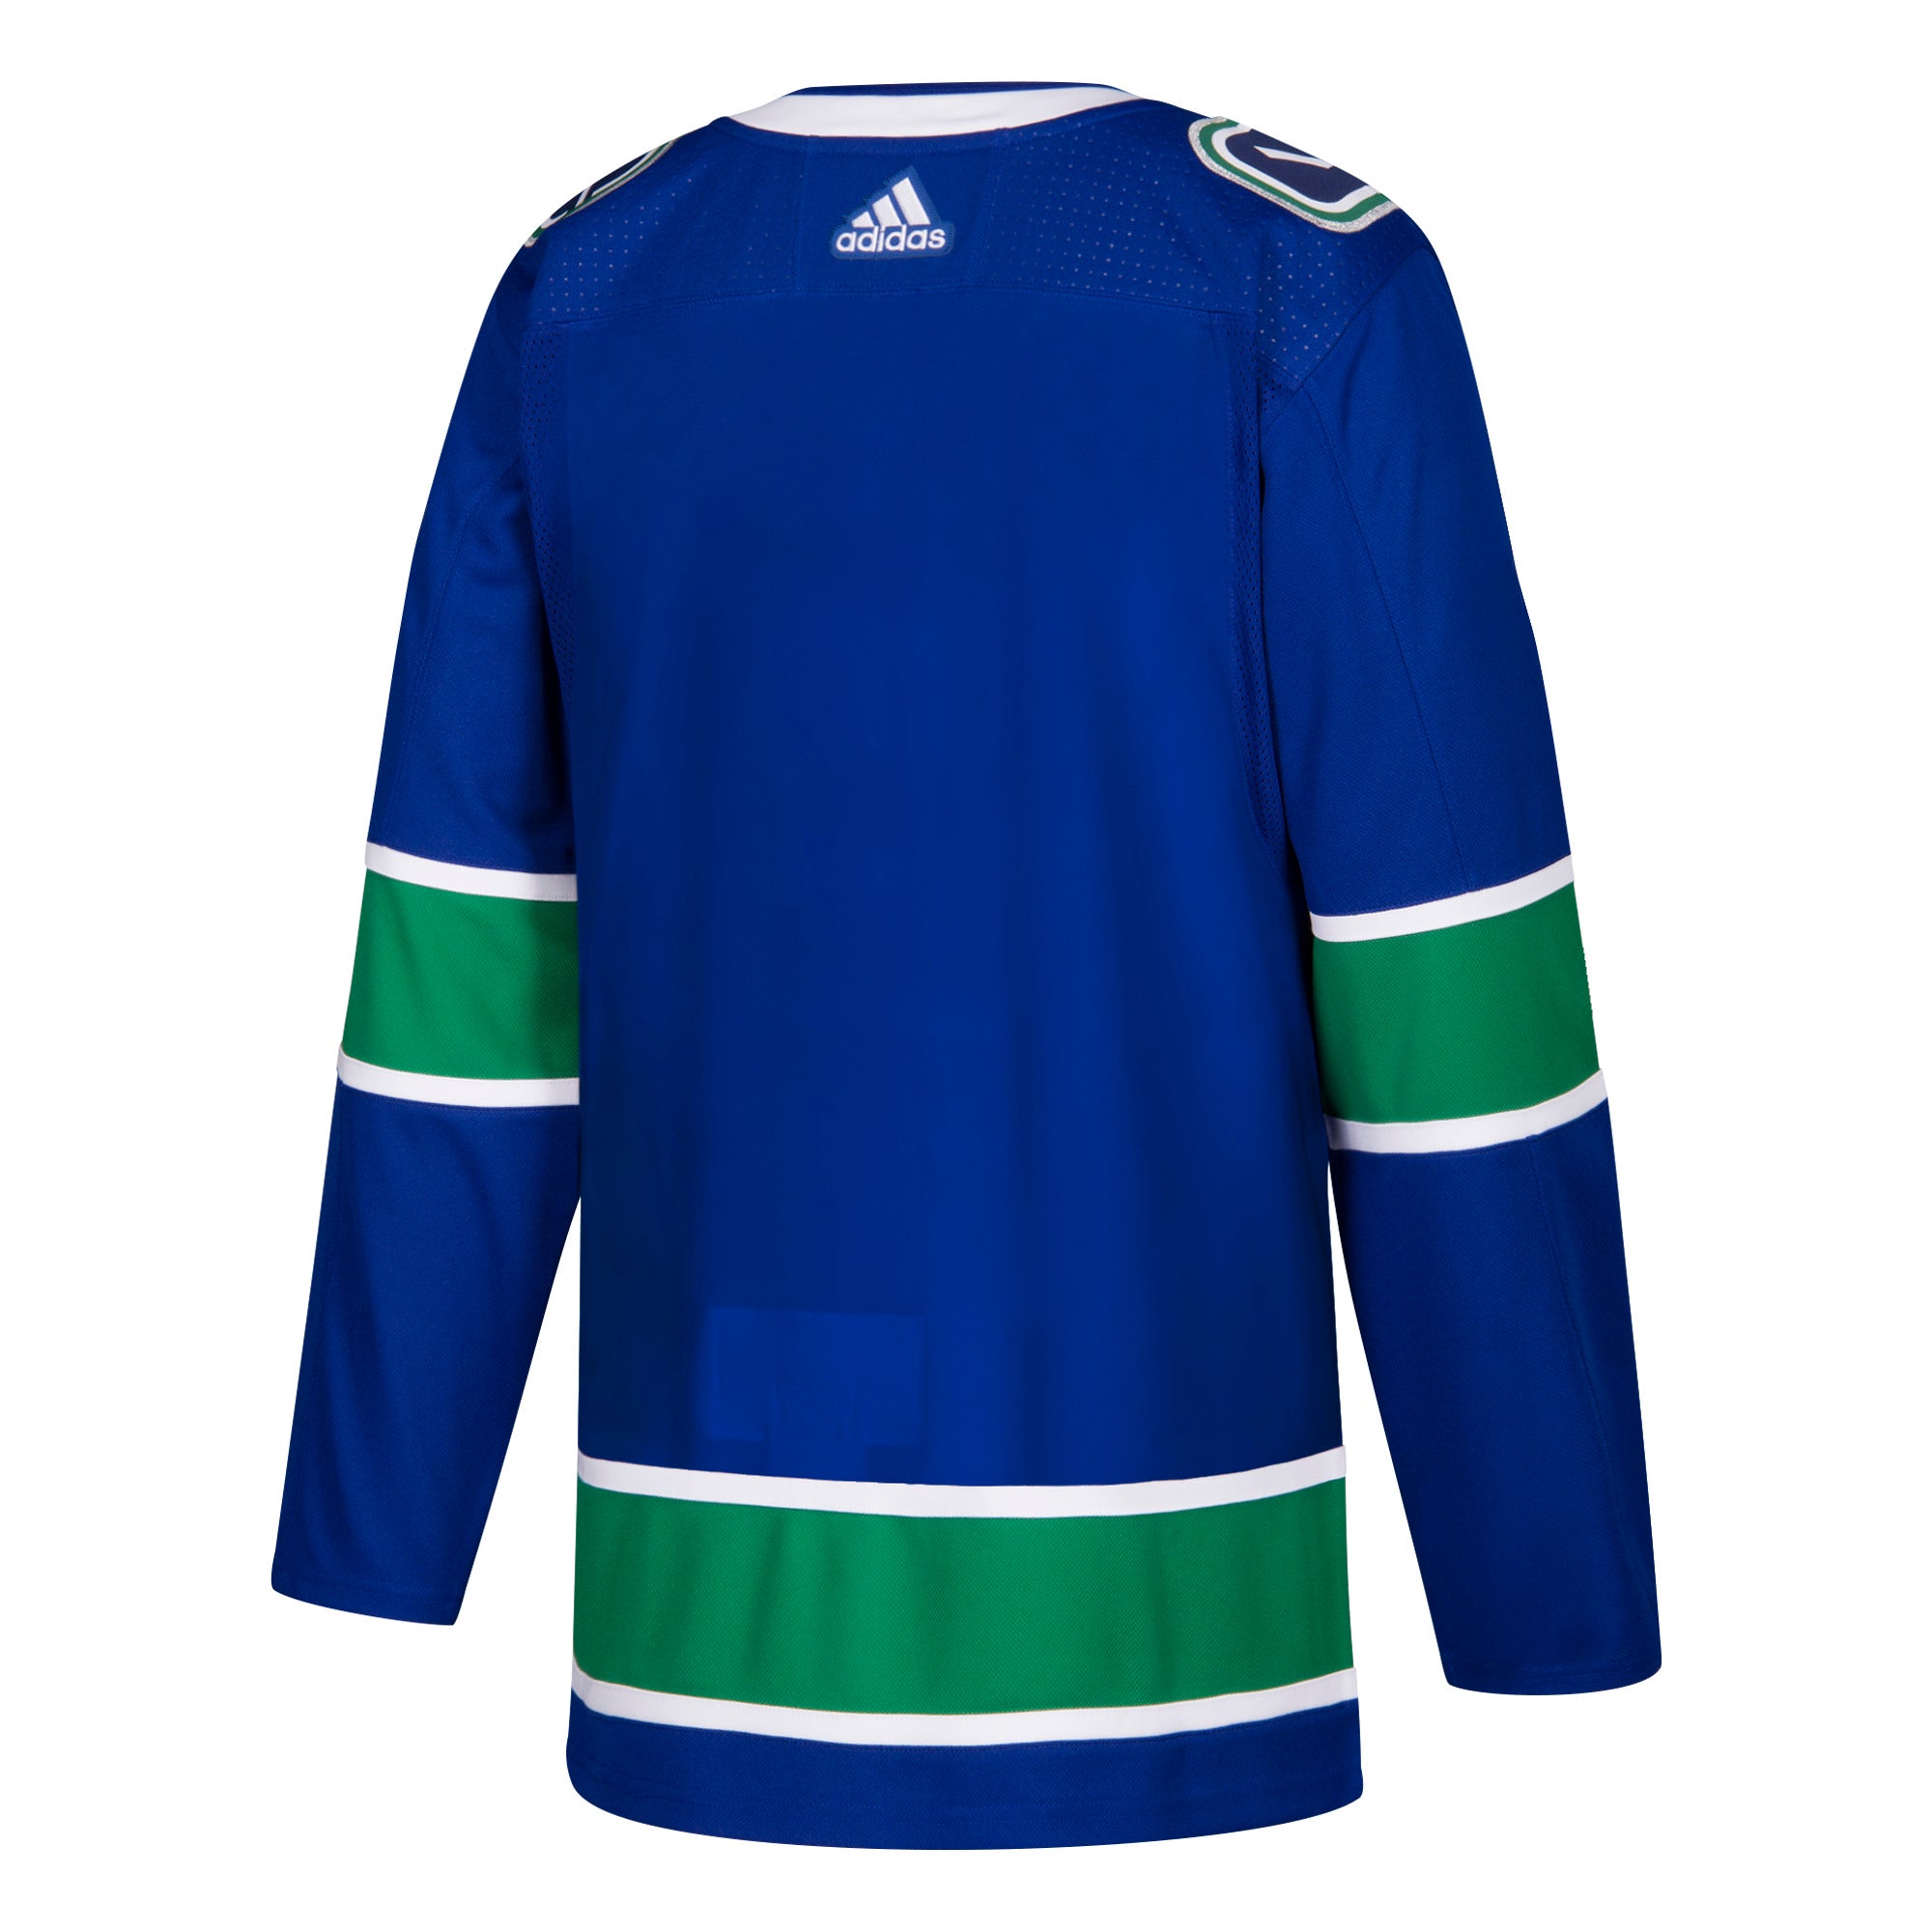 AUTHENTIC Adidas New York Islanders NHL 3rd Alternate Jersey Size 46 New